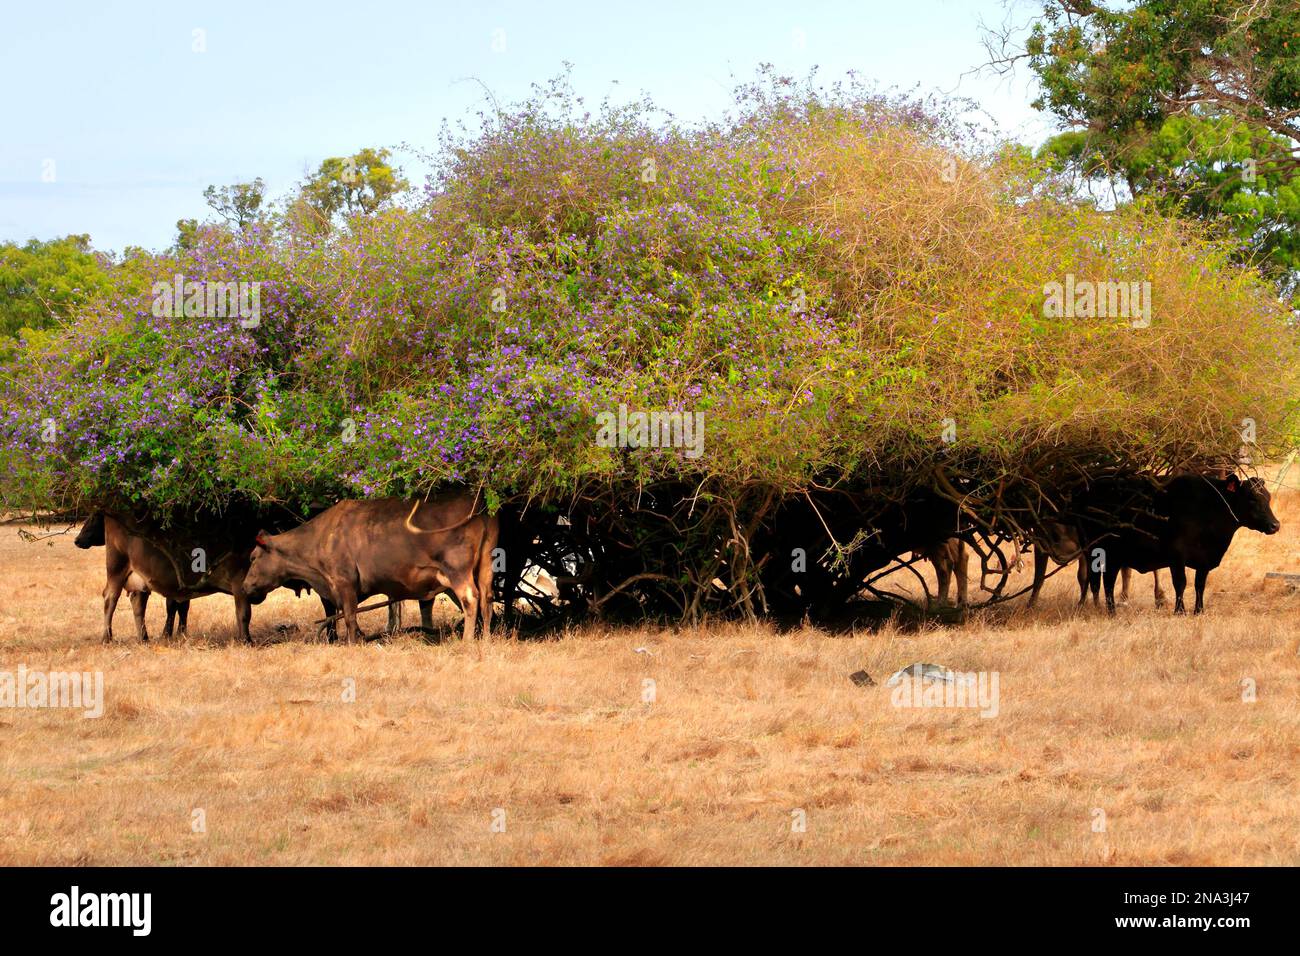 Cattle taking shelter from the sun under a bush, Southwest Australia Stock Photo